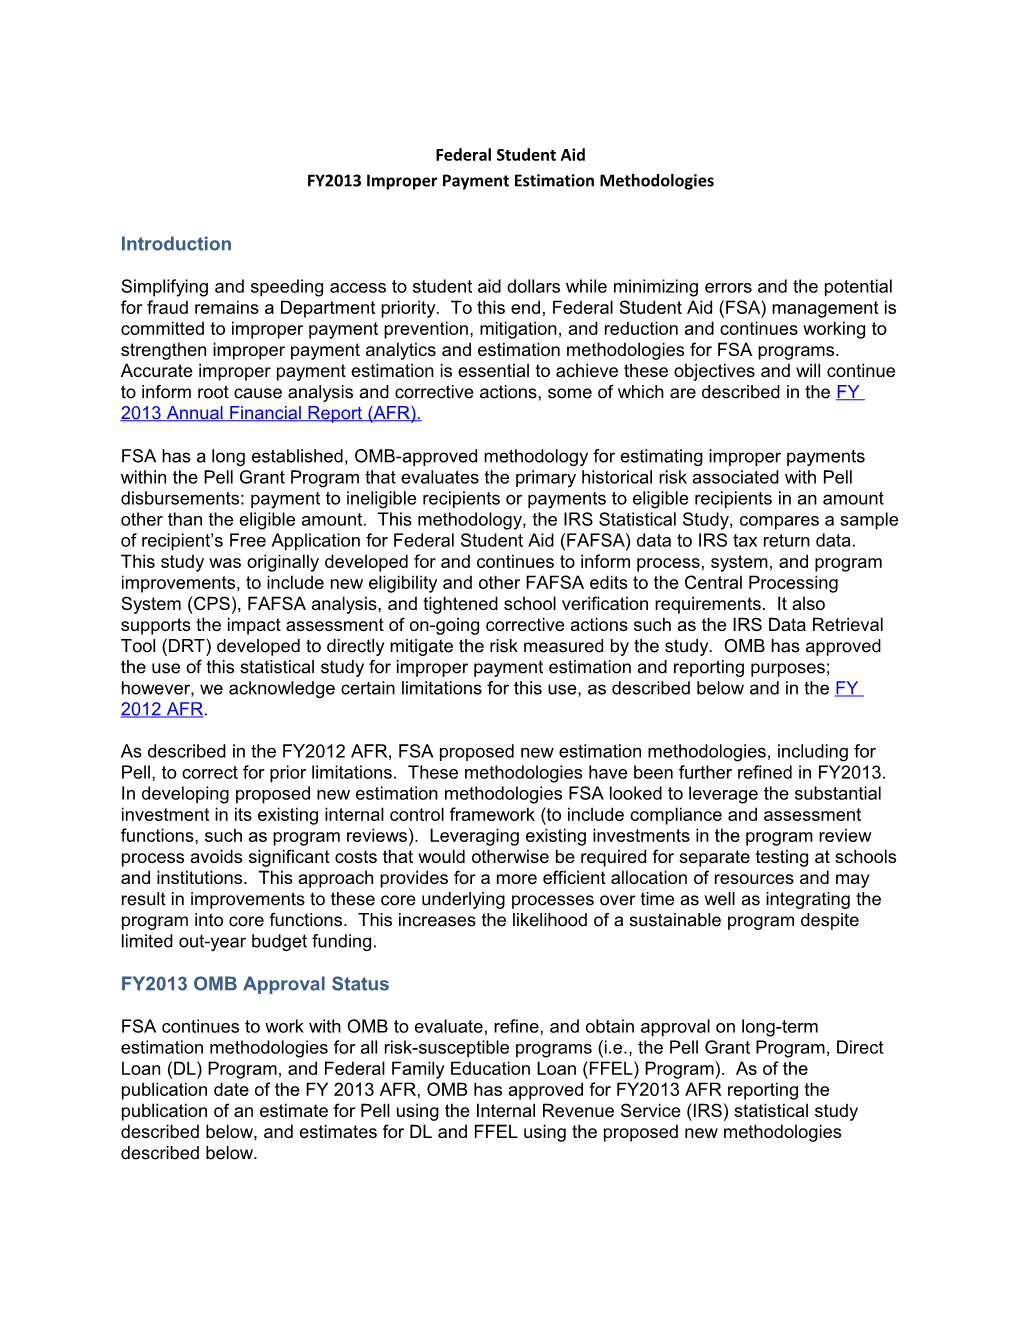 Federal Student Aid: FY2013 Improper Payment Estimation Methodologies December 2013 (MS Word)